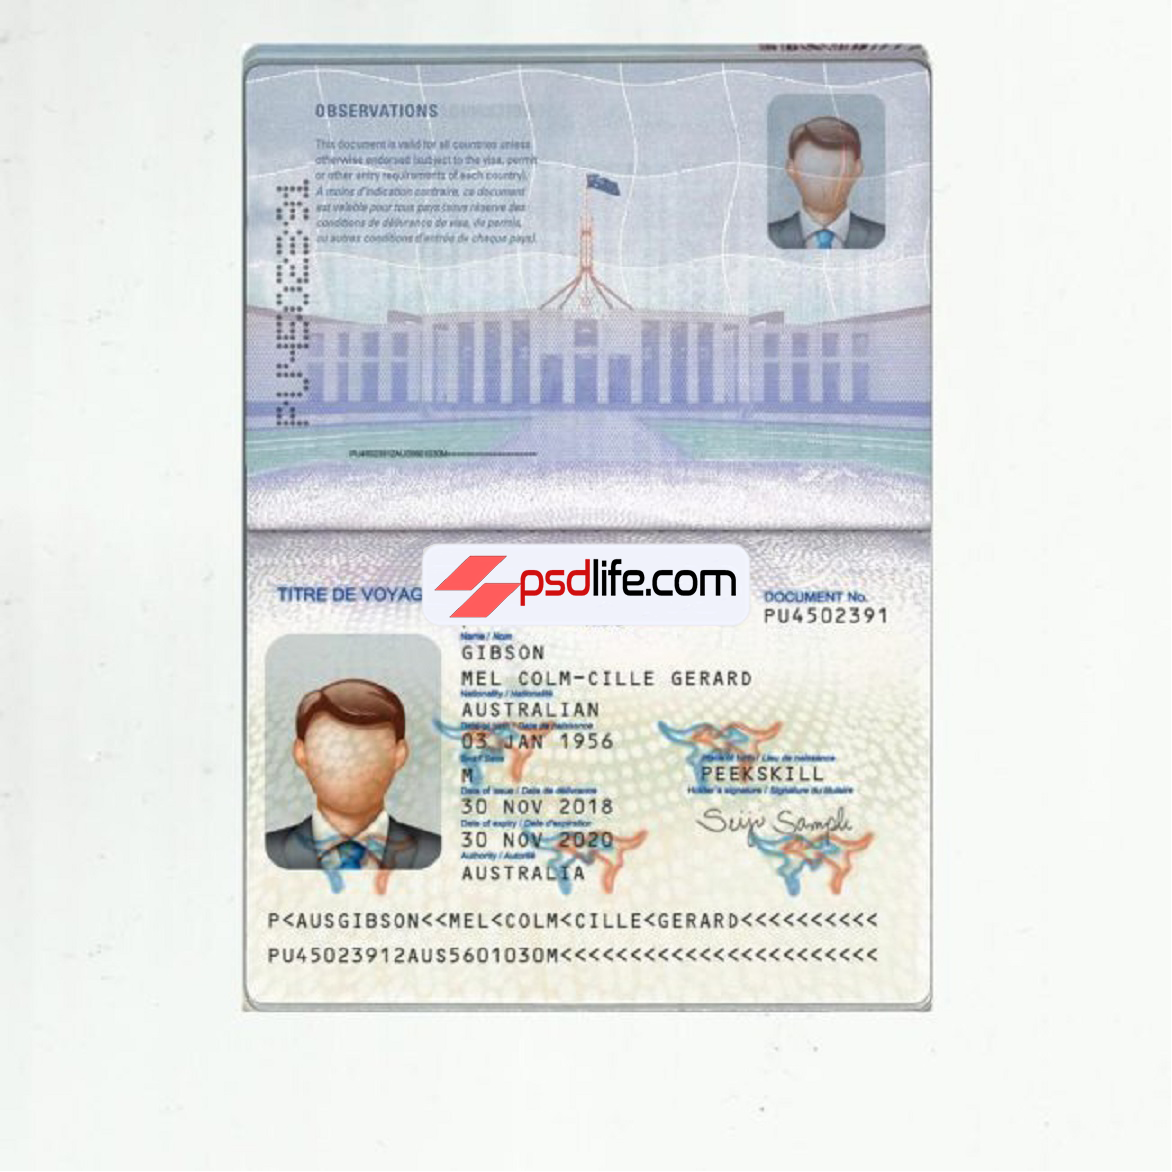 Australia passport psd template in photoshop full editable